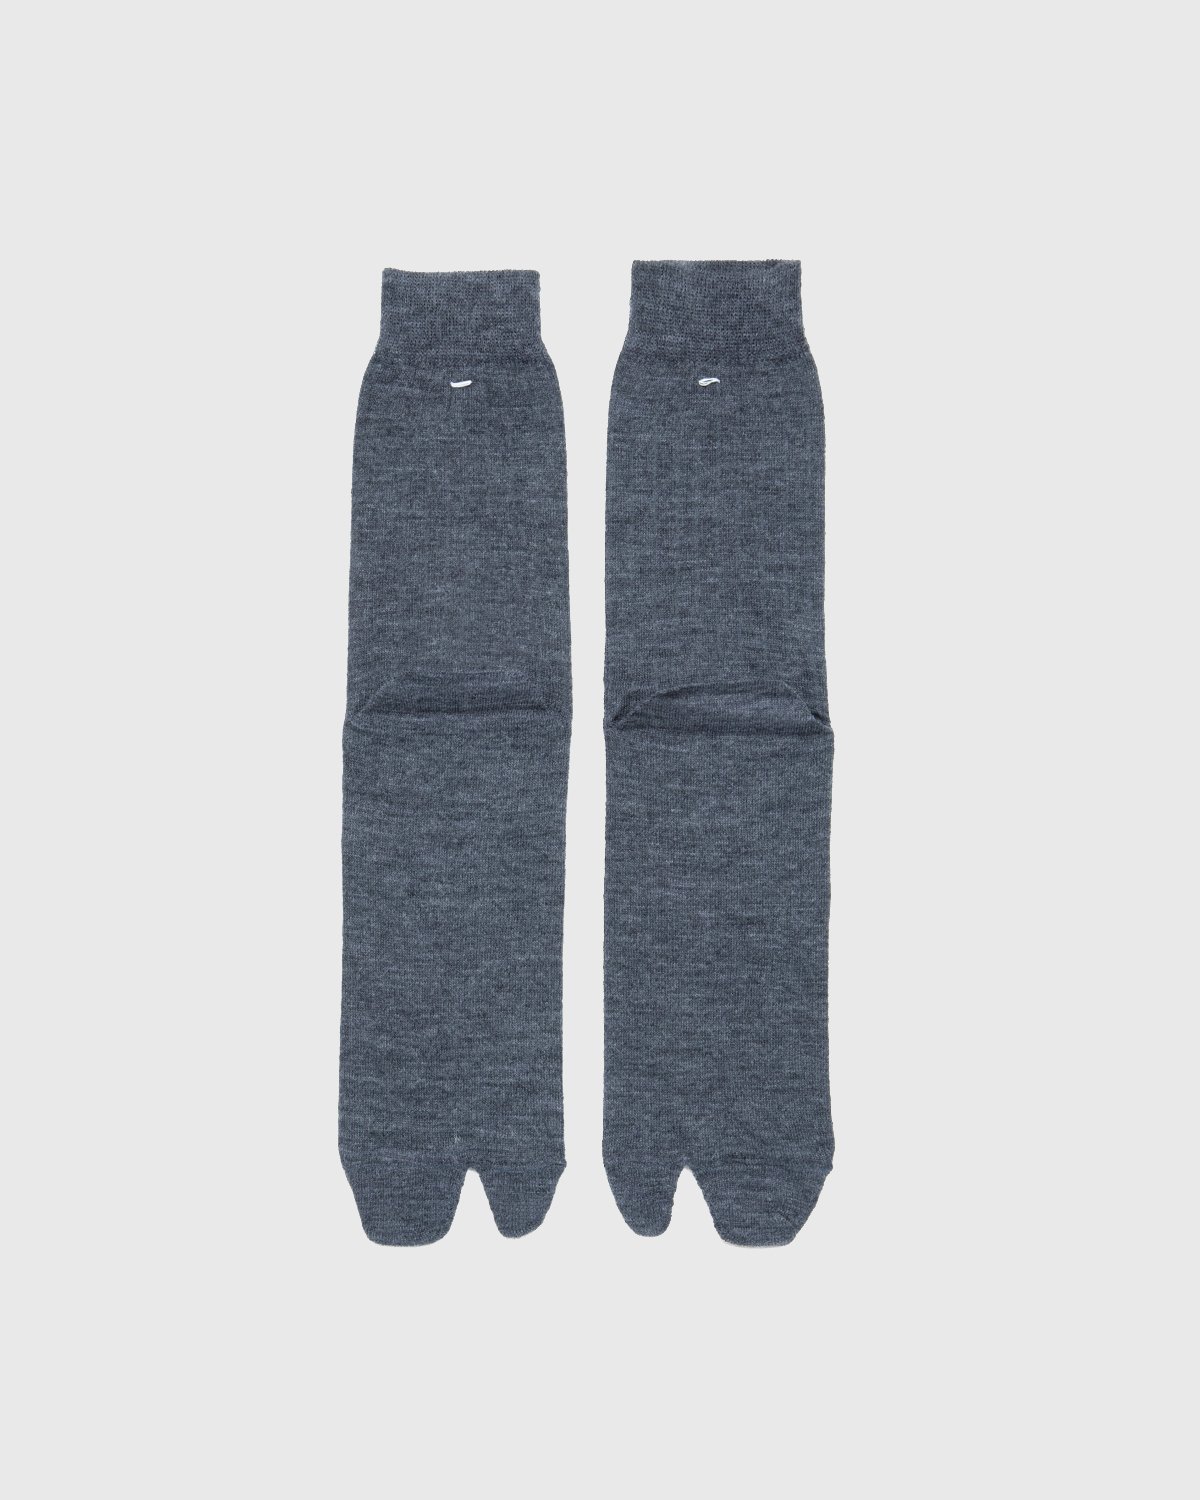 Maison Margiela - Tabi Socks Grey - Accessories - Grey - Image 3